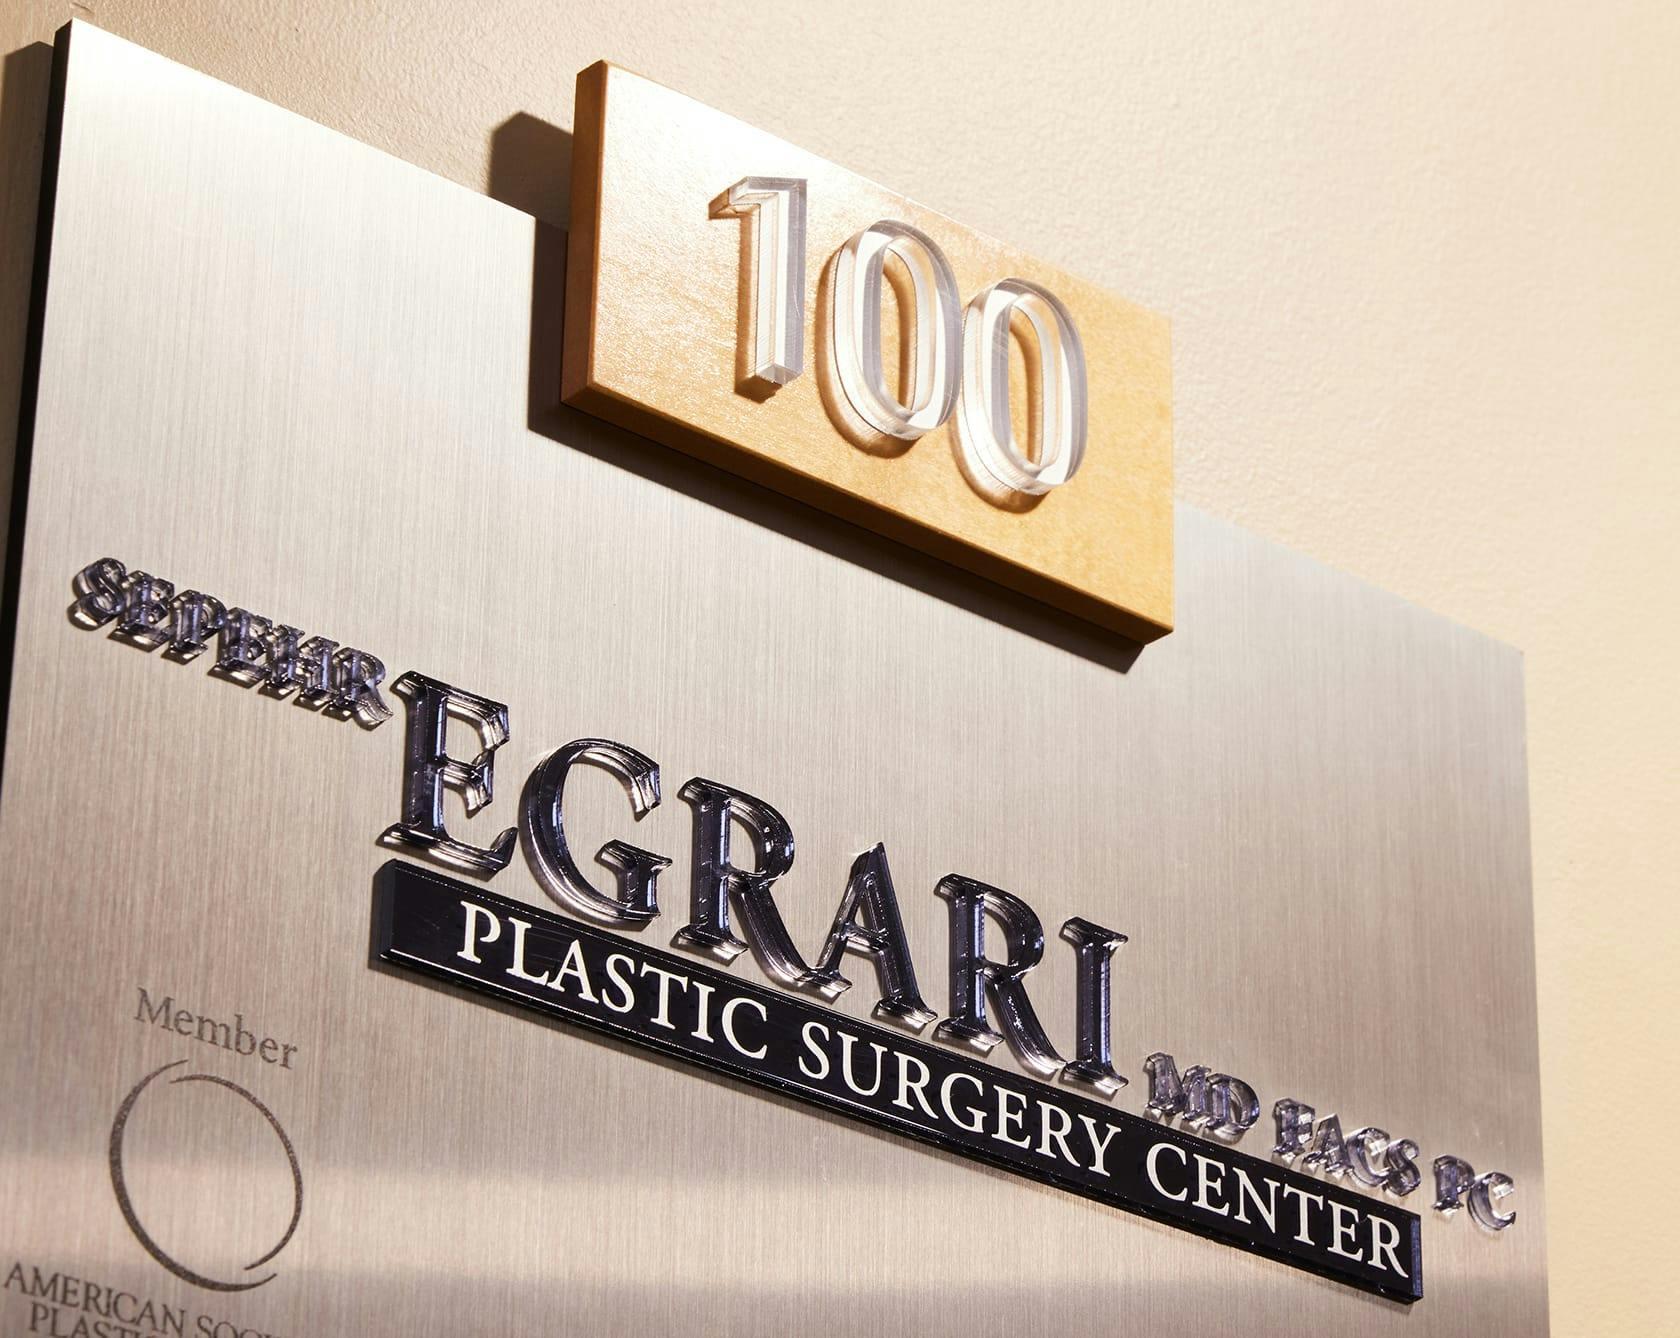 an image of the Egrari Plastic Surgery Center plaque